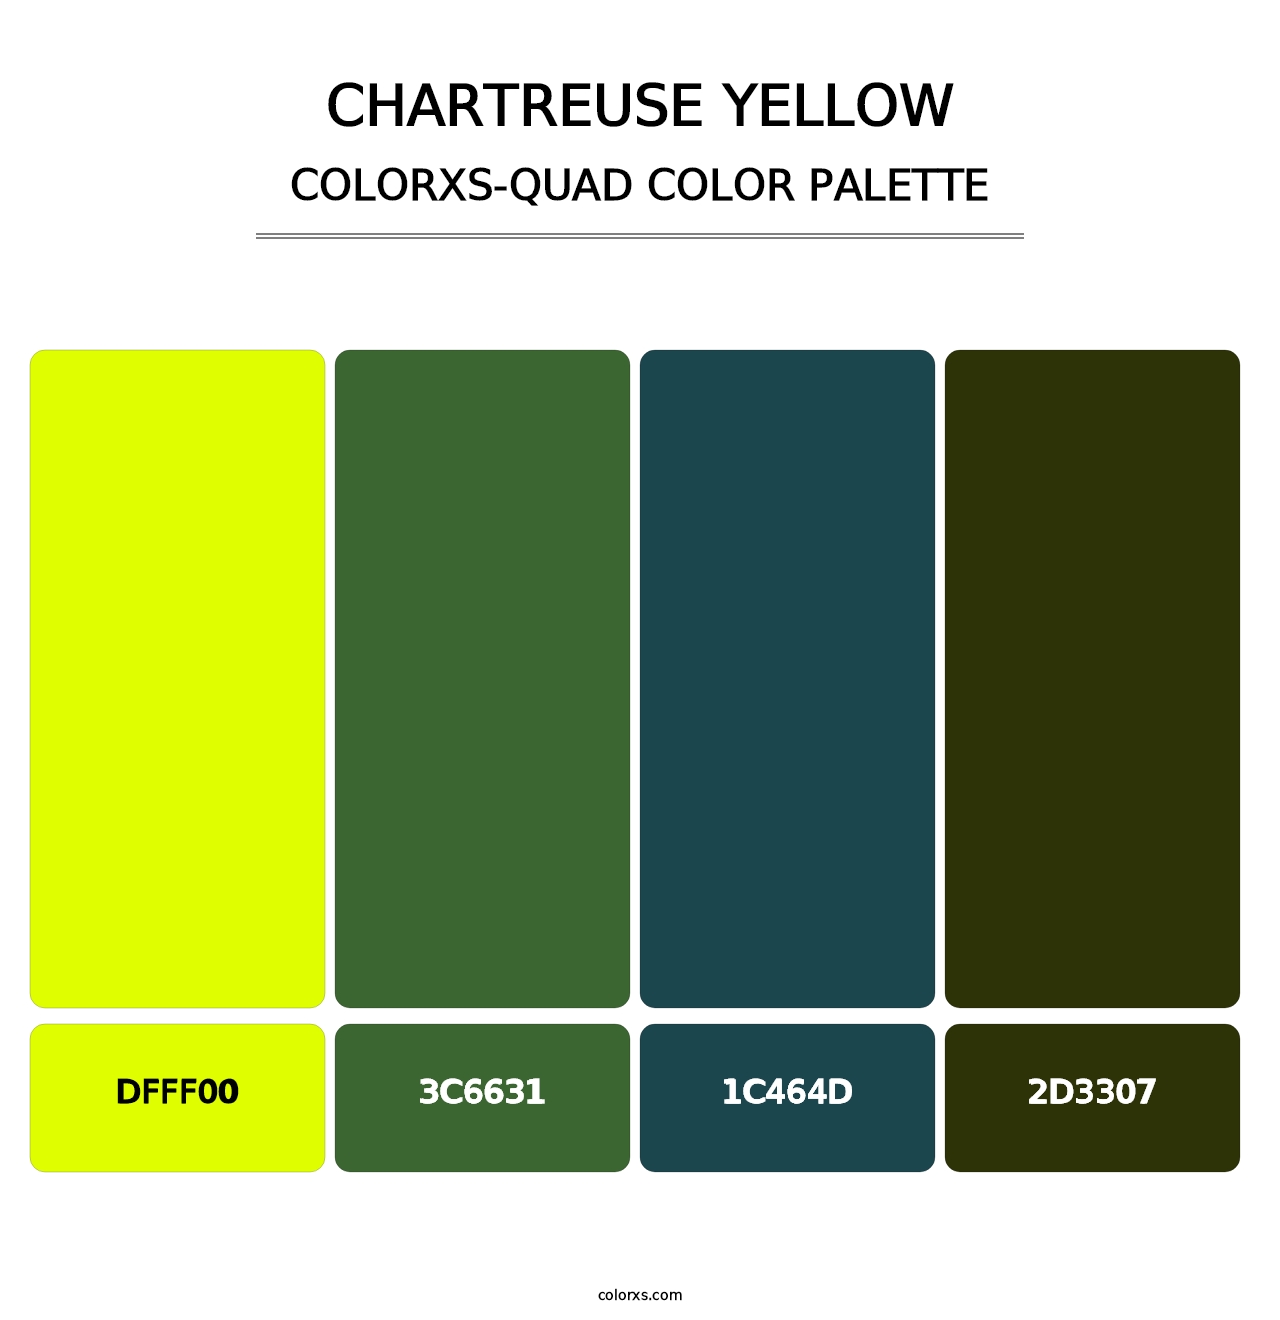 Chartreuse Yellow - Colorxs Quad Palette